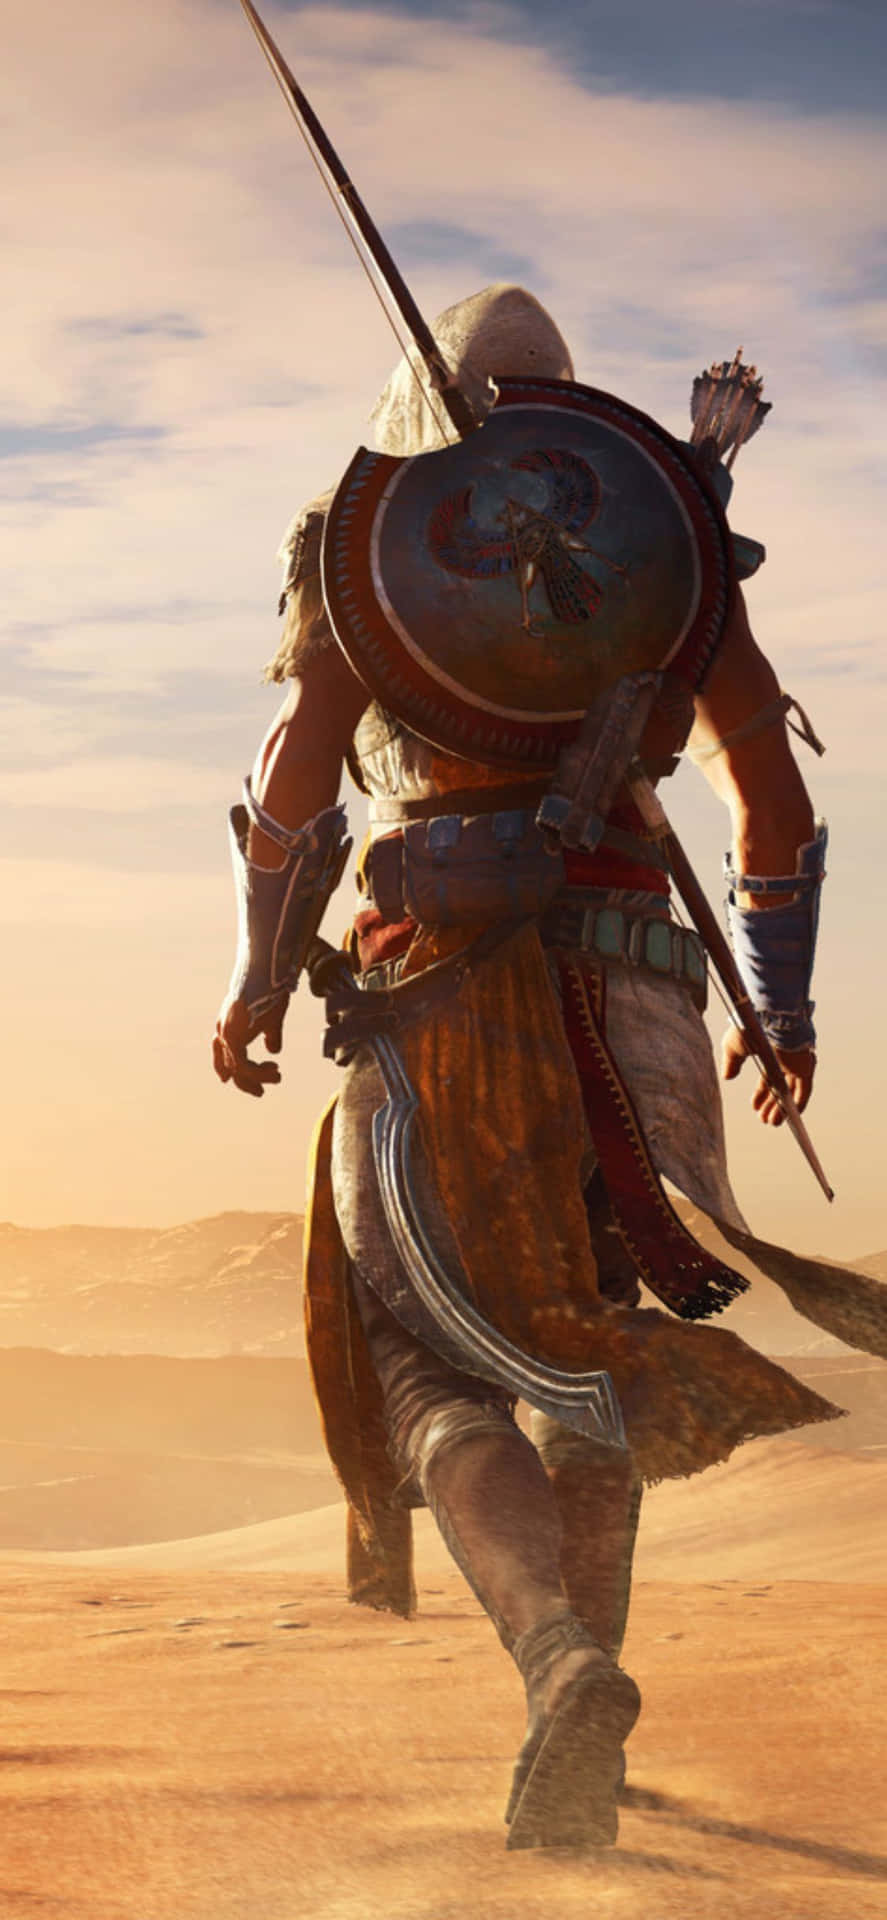 Scalarele Grandi Piramidi In Assassin's Creed Origins Sull'iphone X!